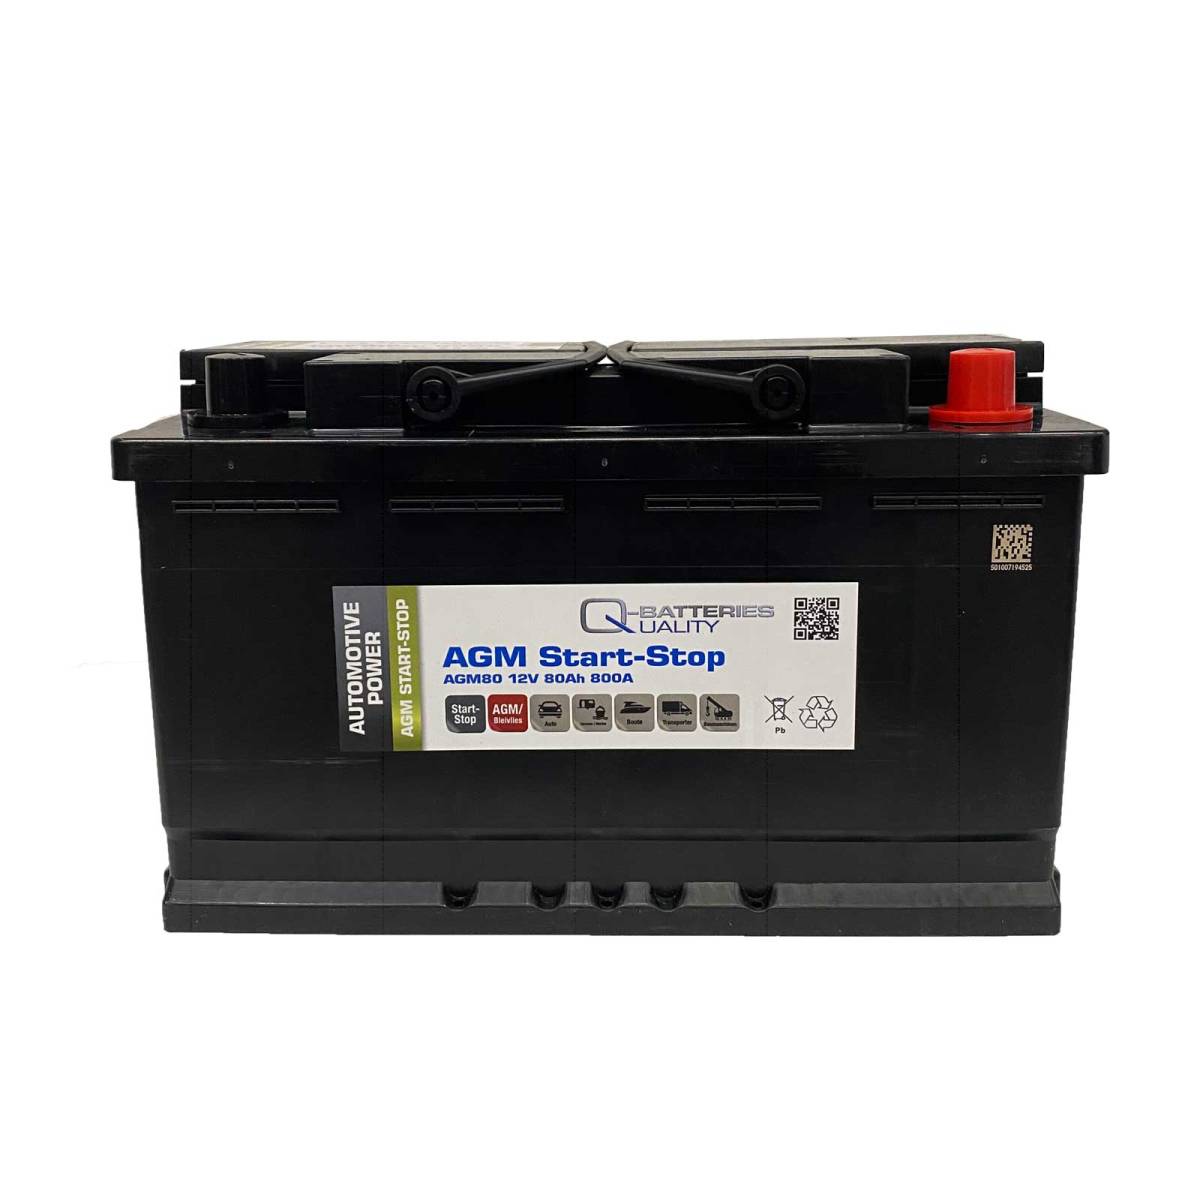 Q-Batteries Start-Stop car battery AGM80 12V 80 Ah 800A, Starter batteries, Boots & Marine, Batteries by application